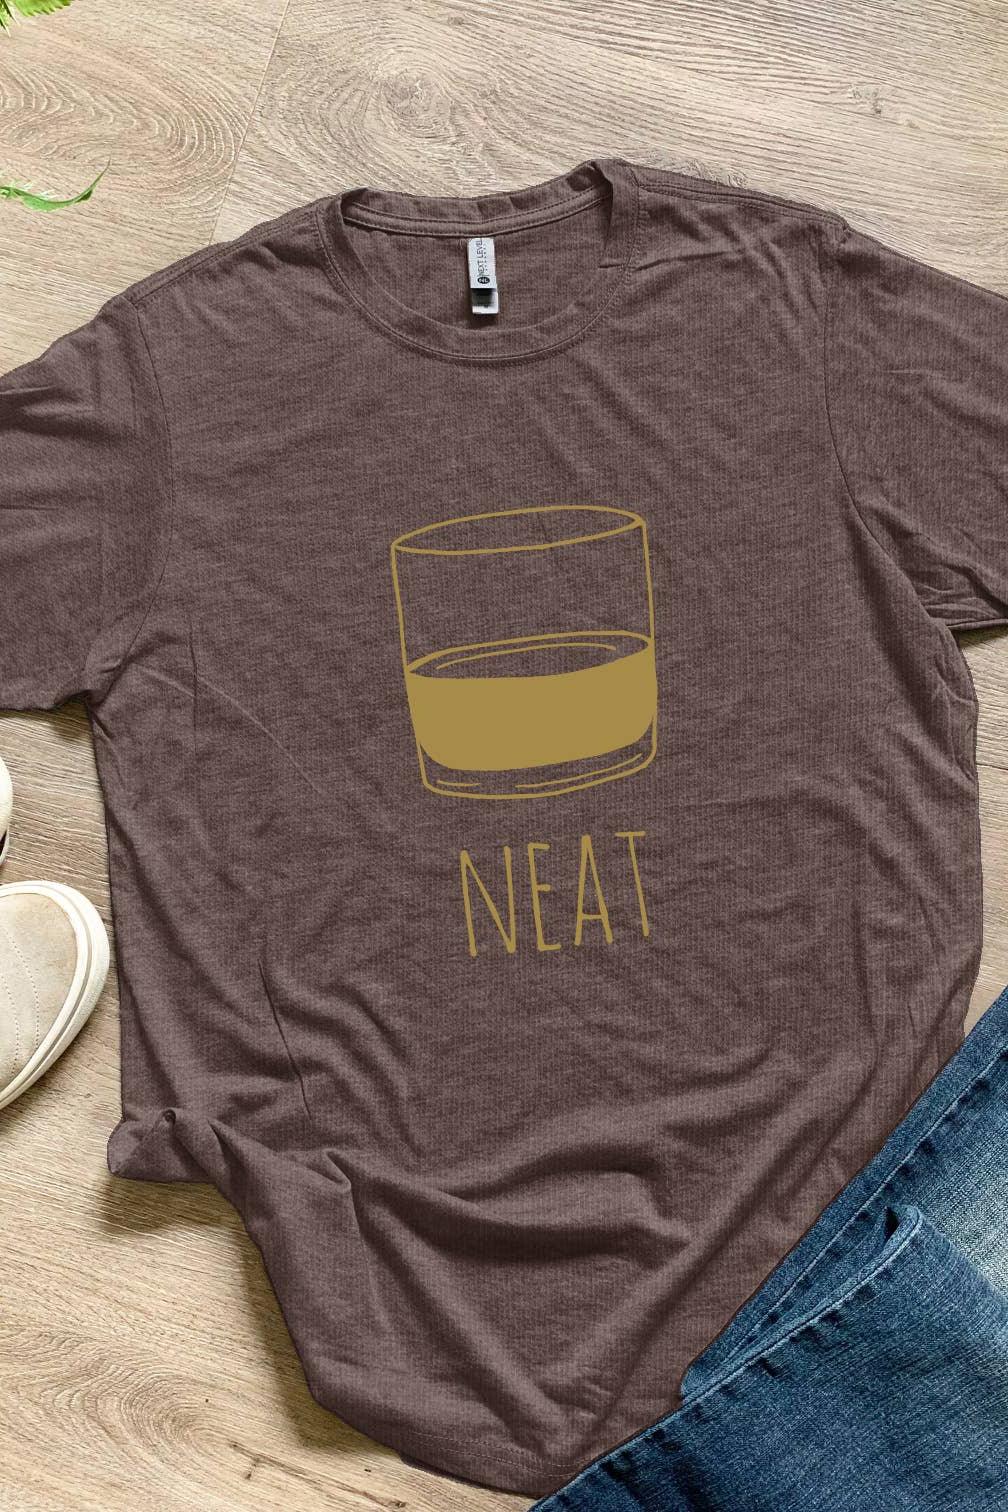 Neat - Men's Tee (Liquor/Whiskey Pun)